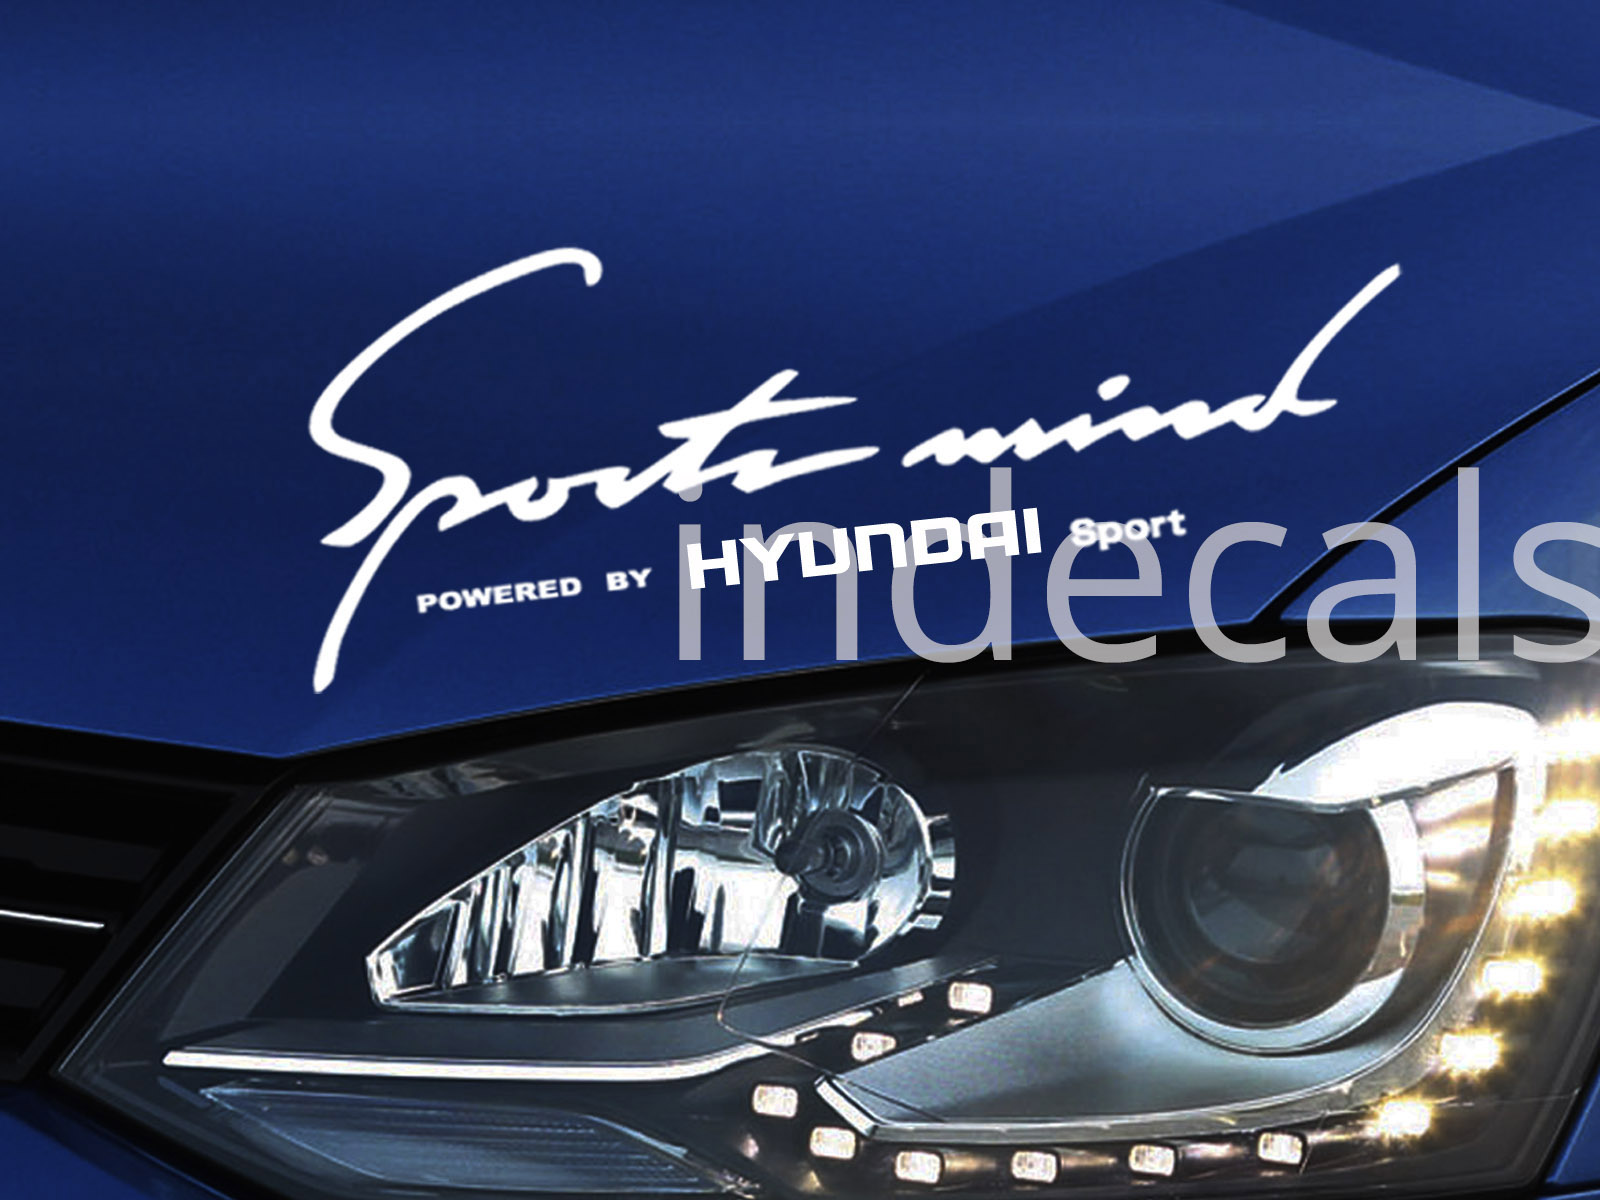 1 x Hyundai Sports Mind Sticker - White